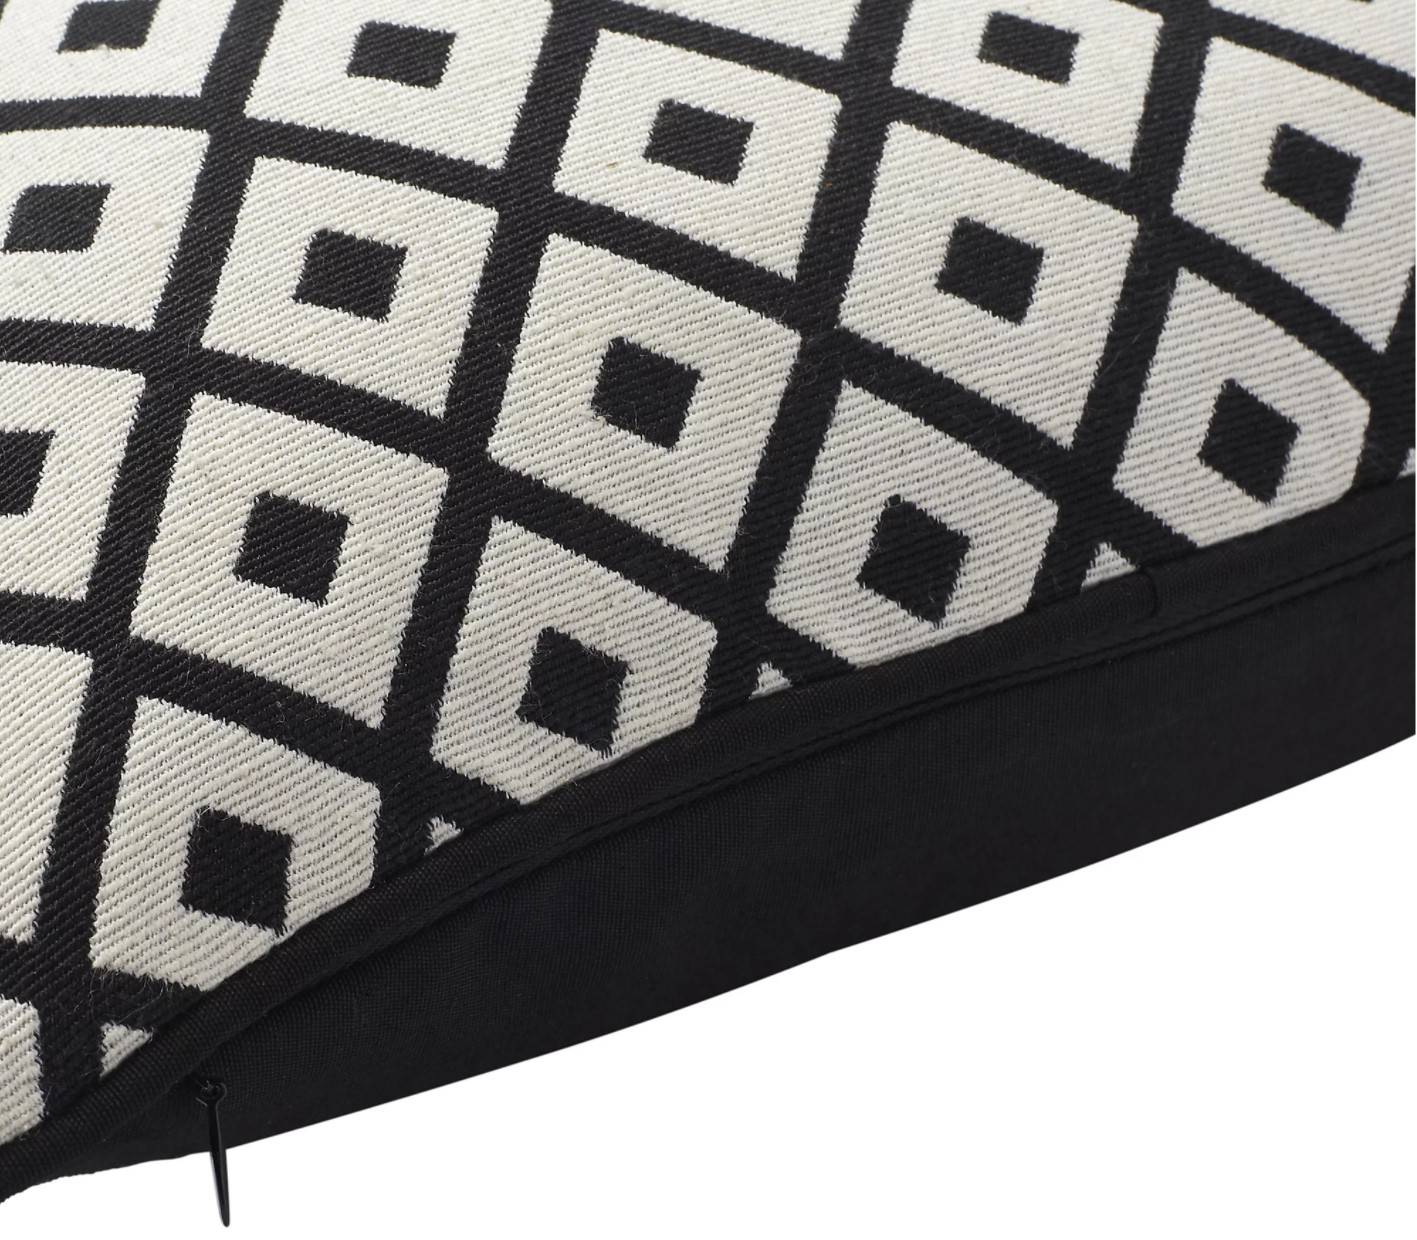 Misore Patterned Black & white Cushion (L)40cm x (W)40cm 6125